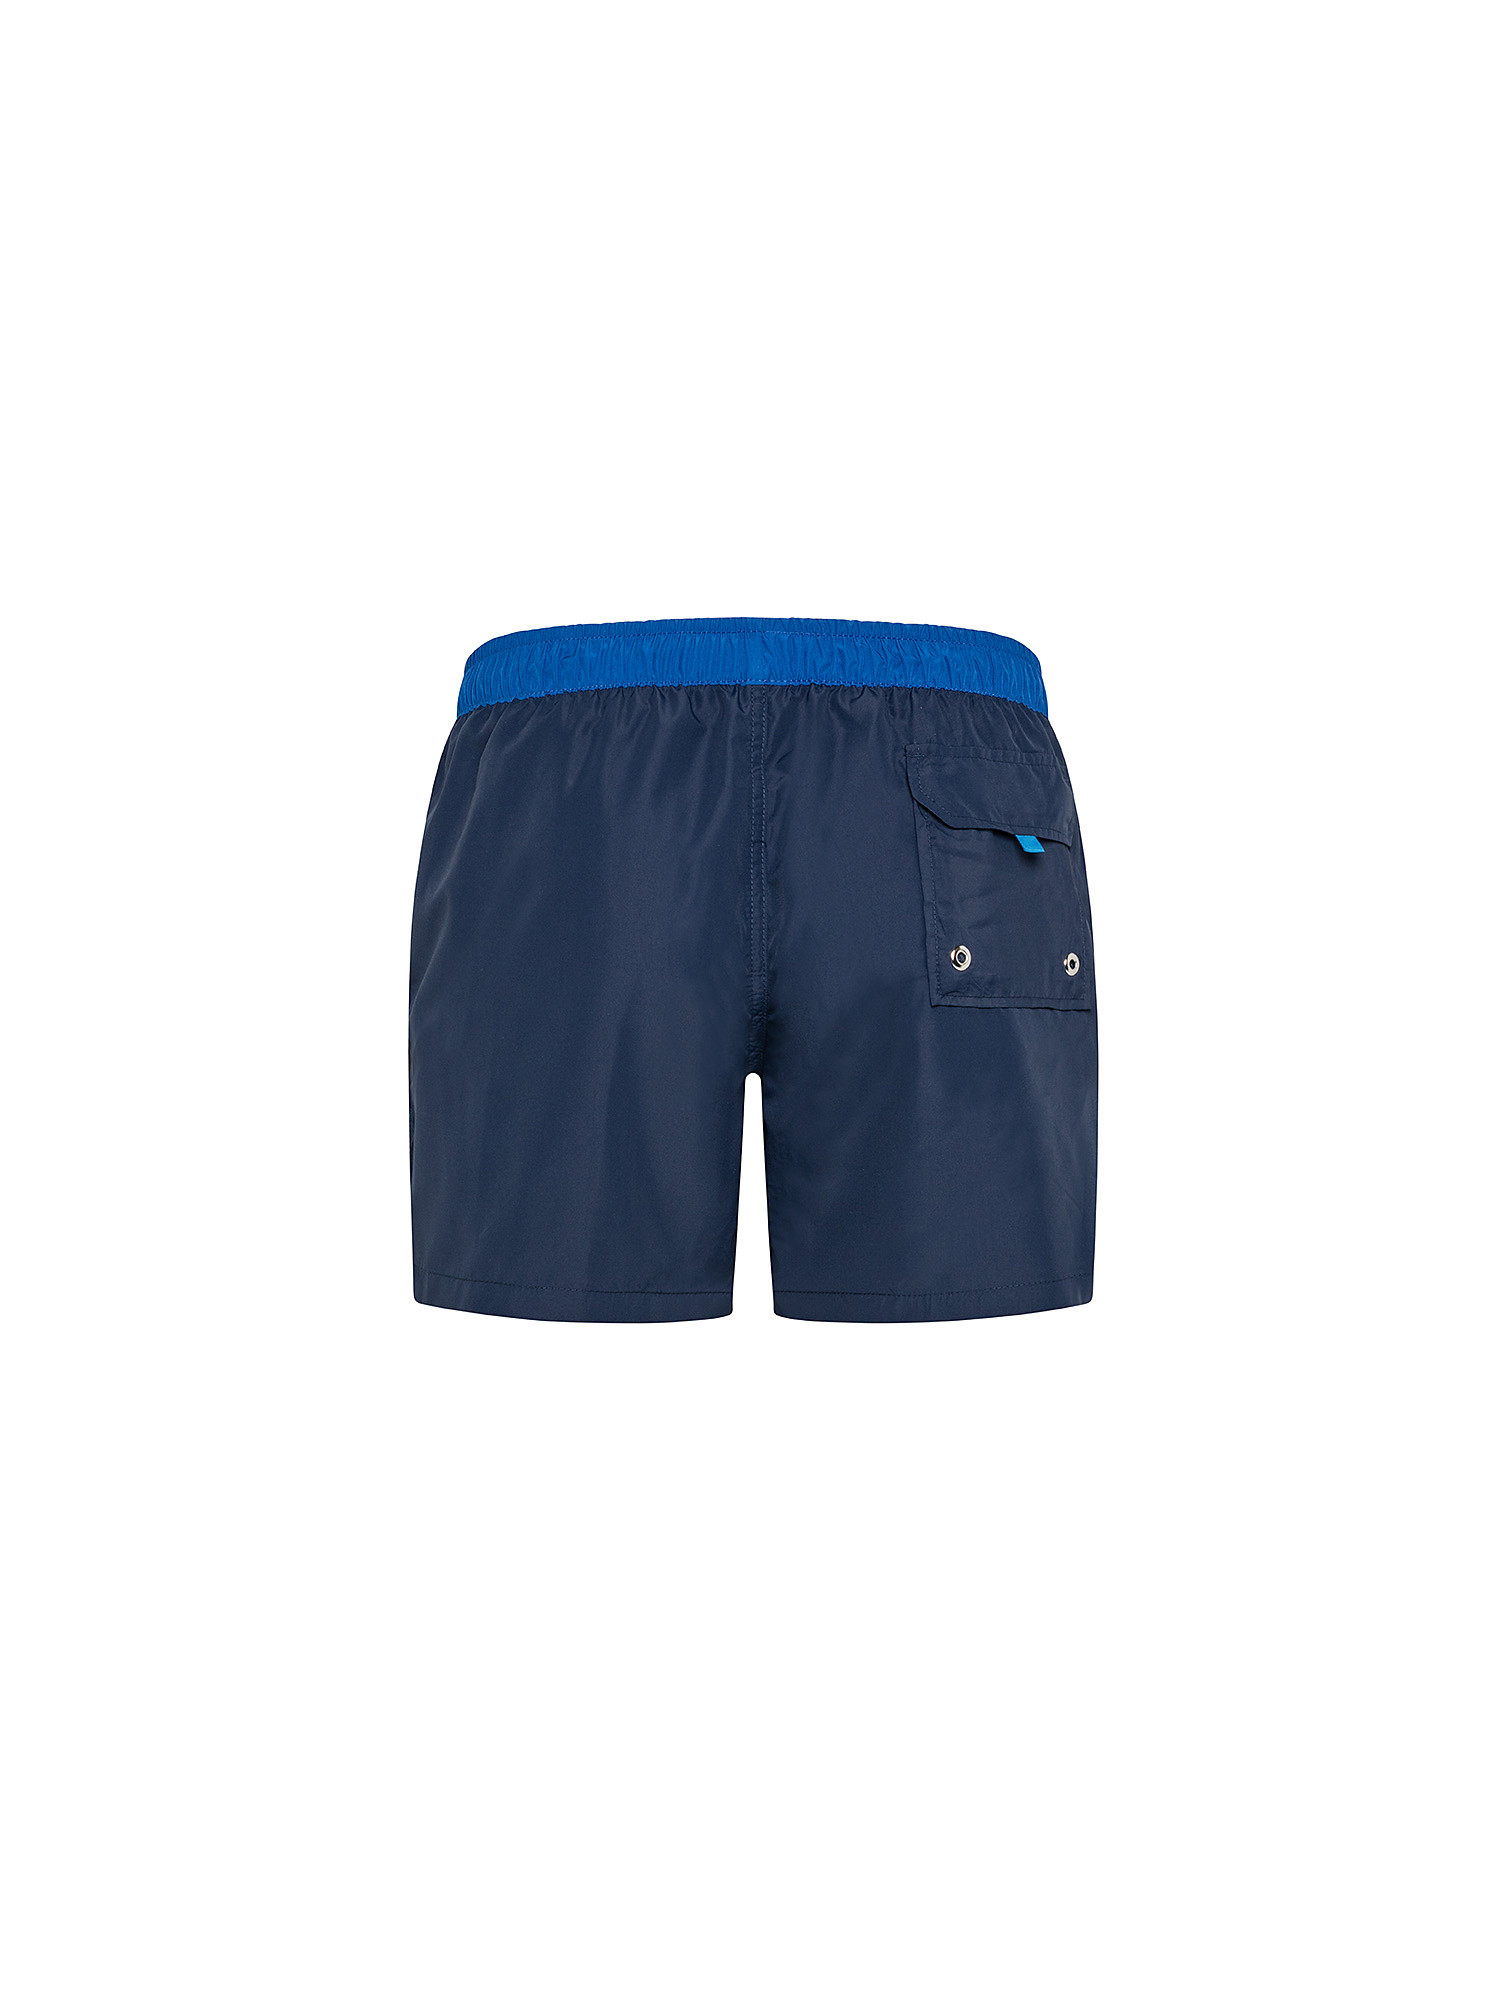 Nylon swim shorts with regular fit drawstring, Blue, large image number 1